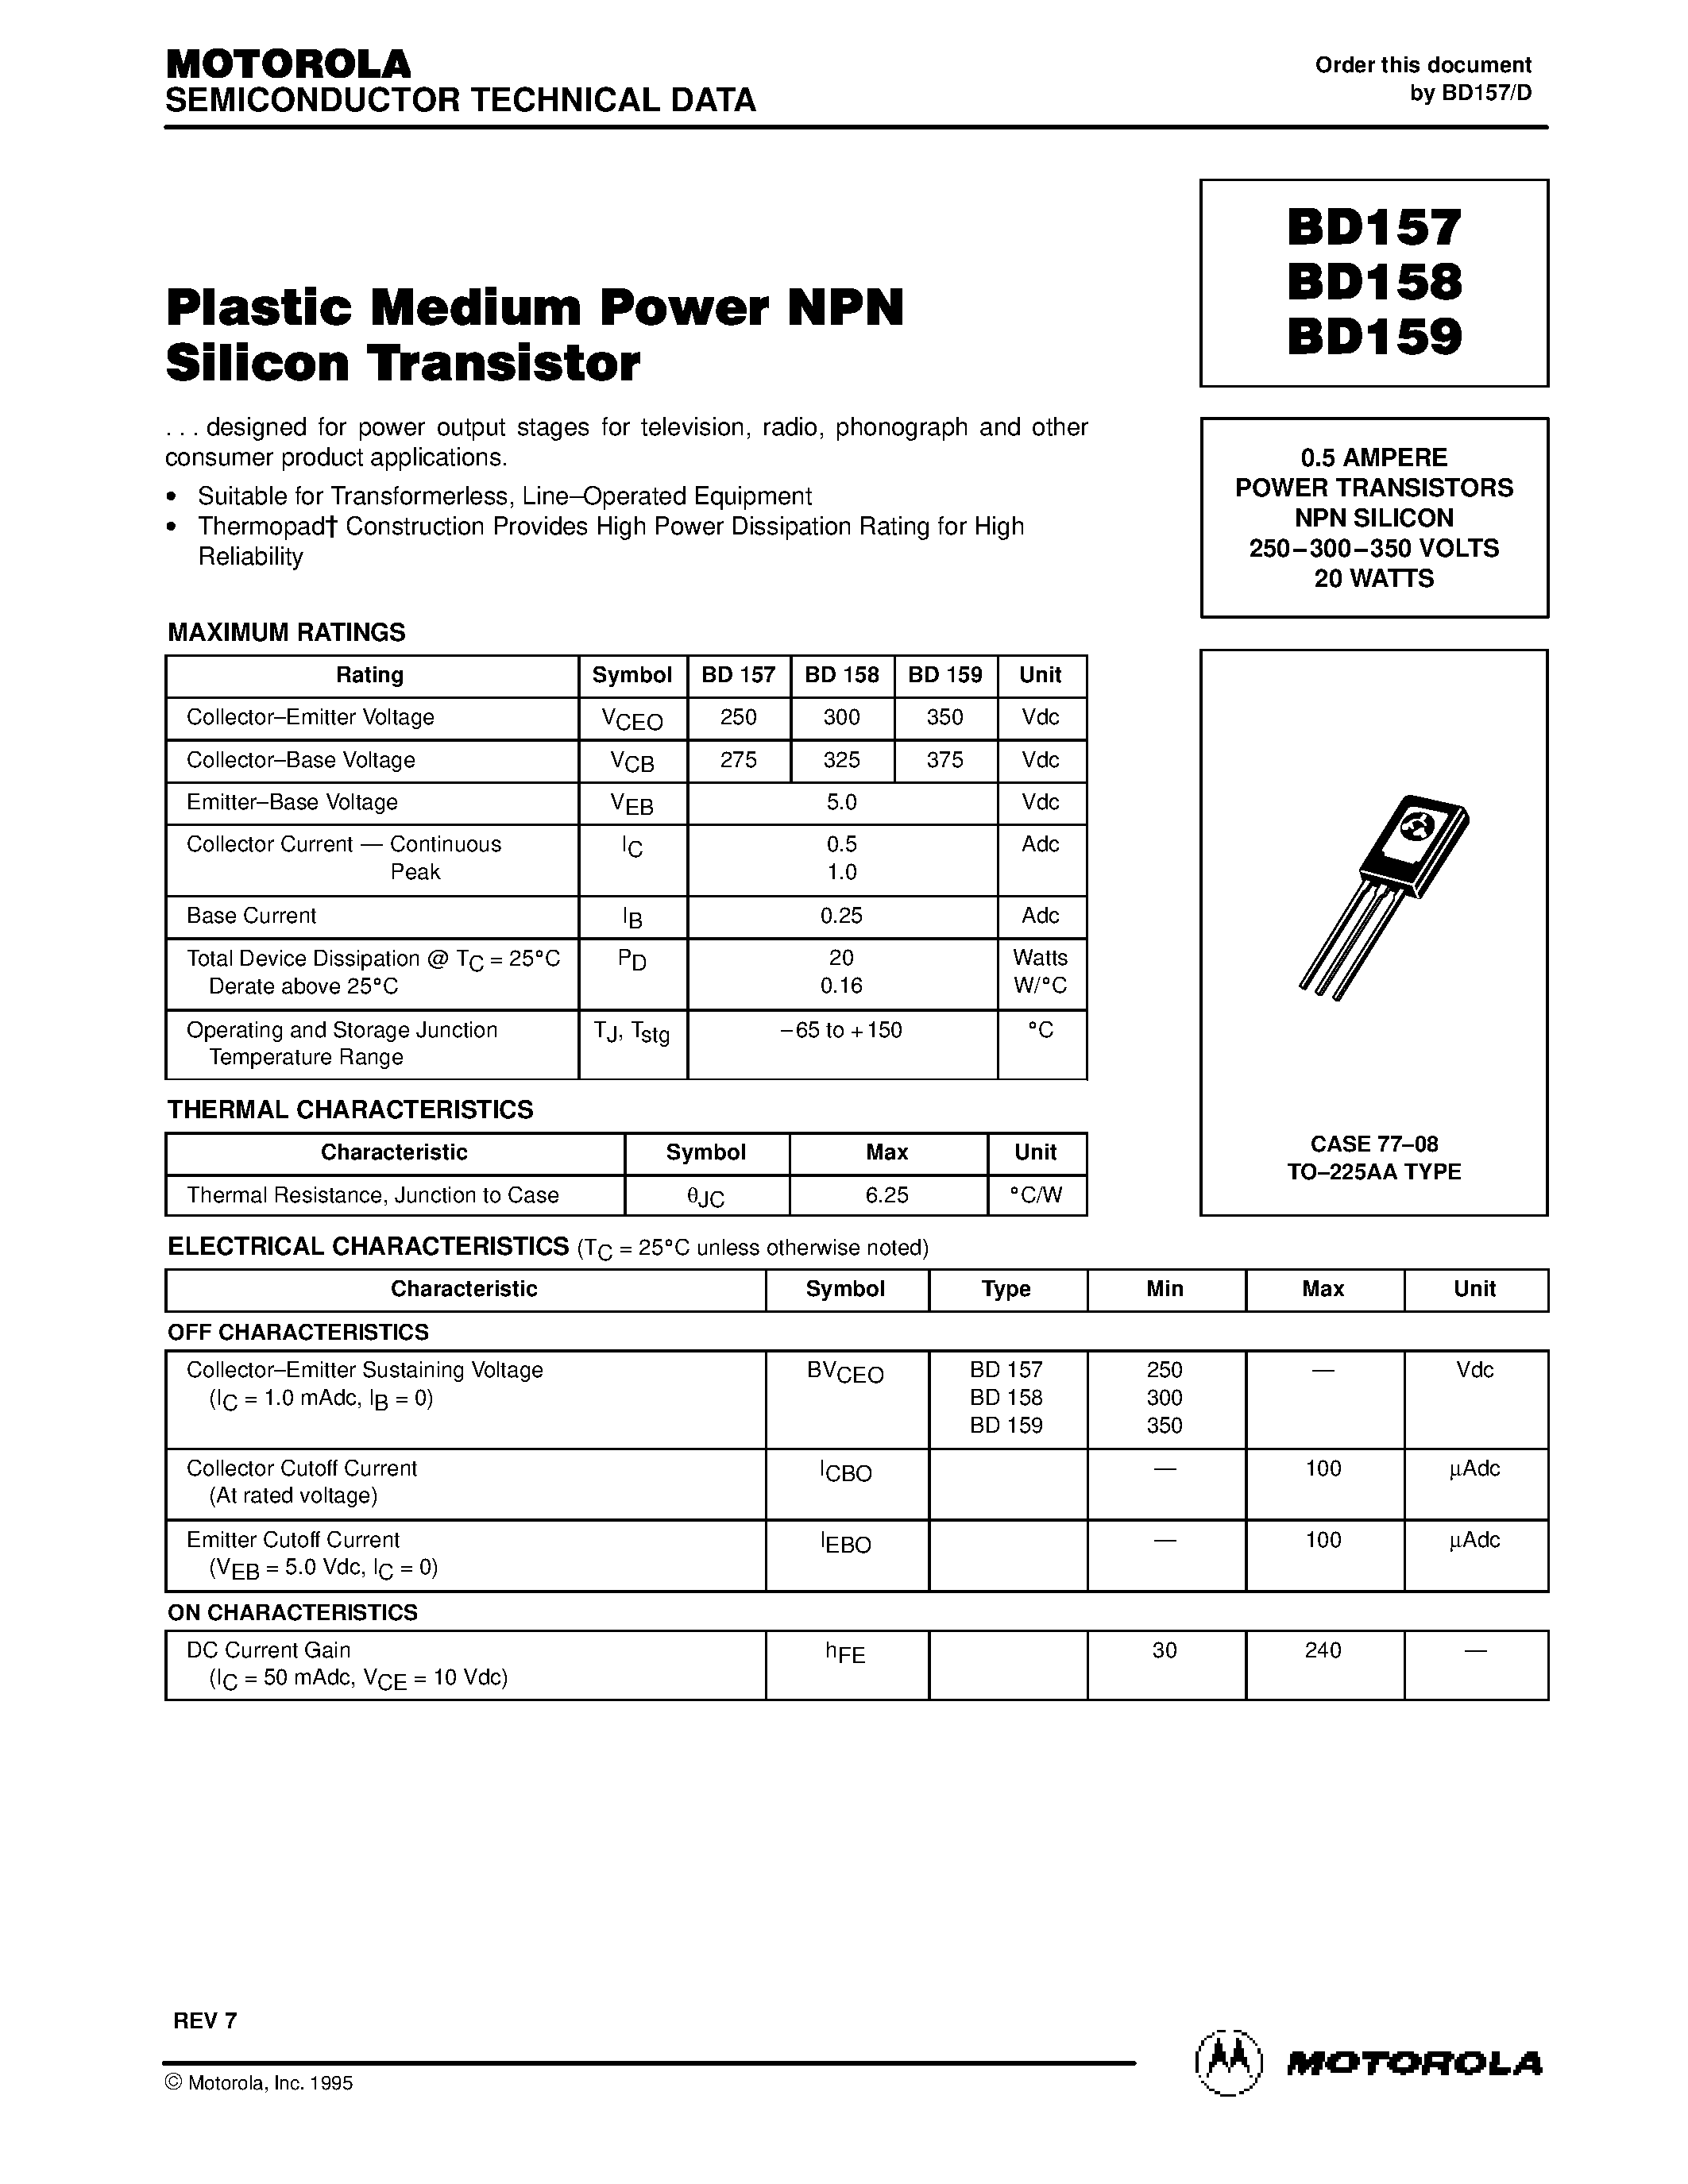 Даташит BD158 - Plastic Medium Power NPN Silicon Transistor страница 1